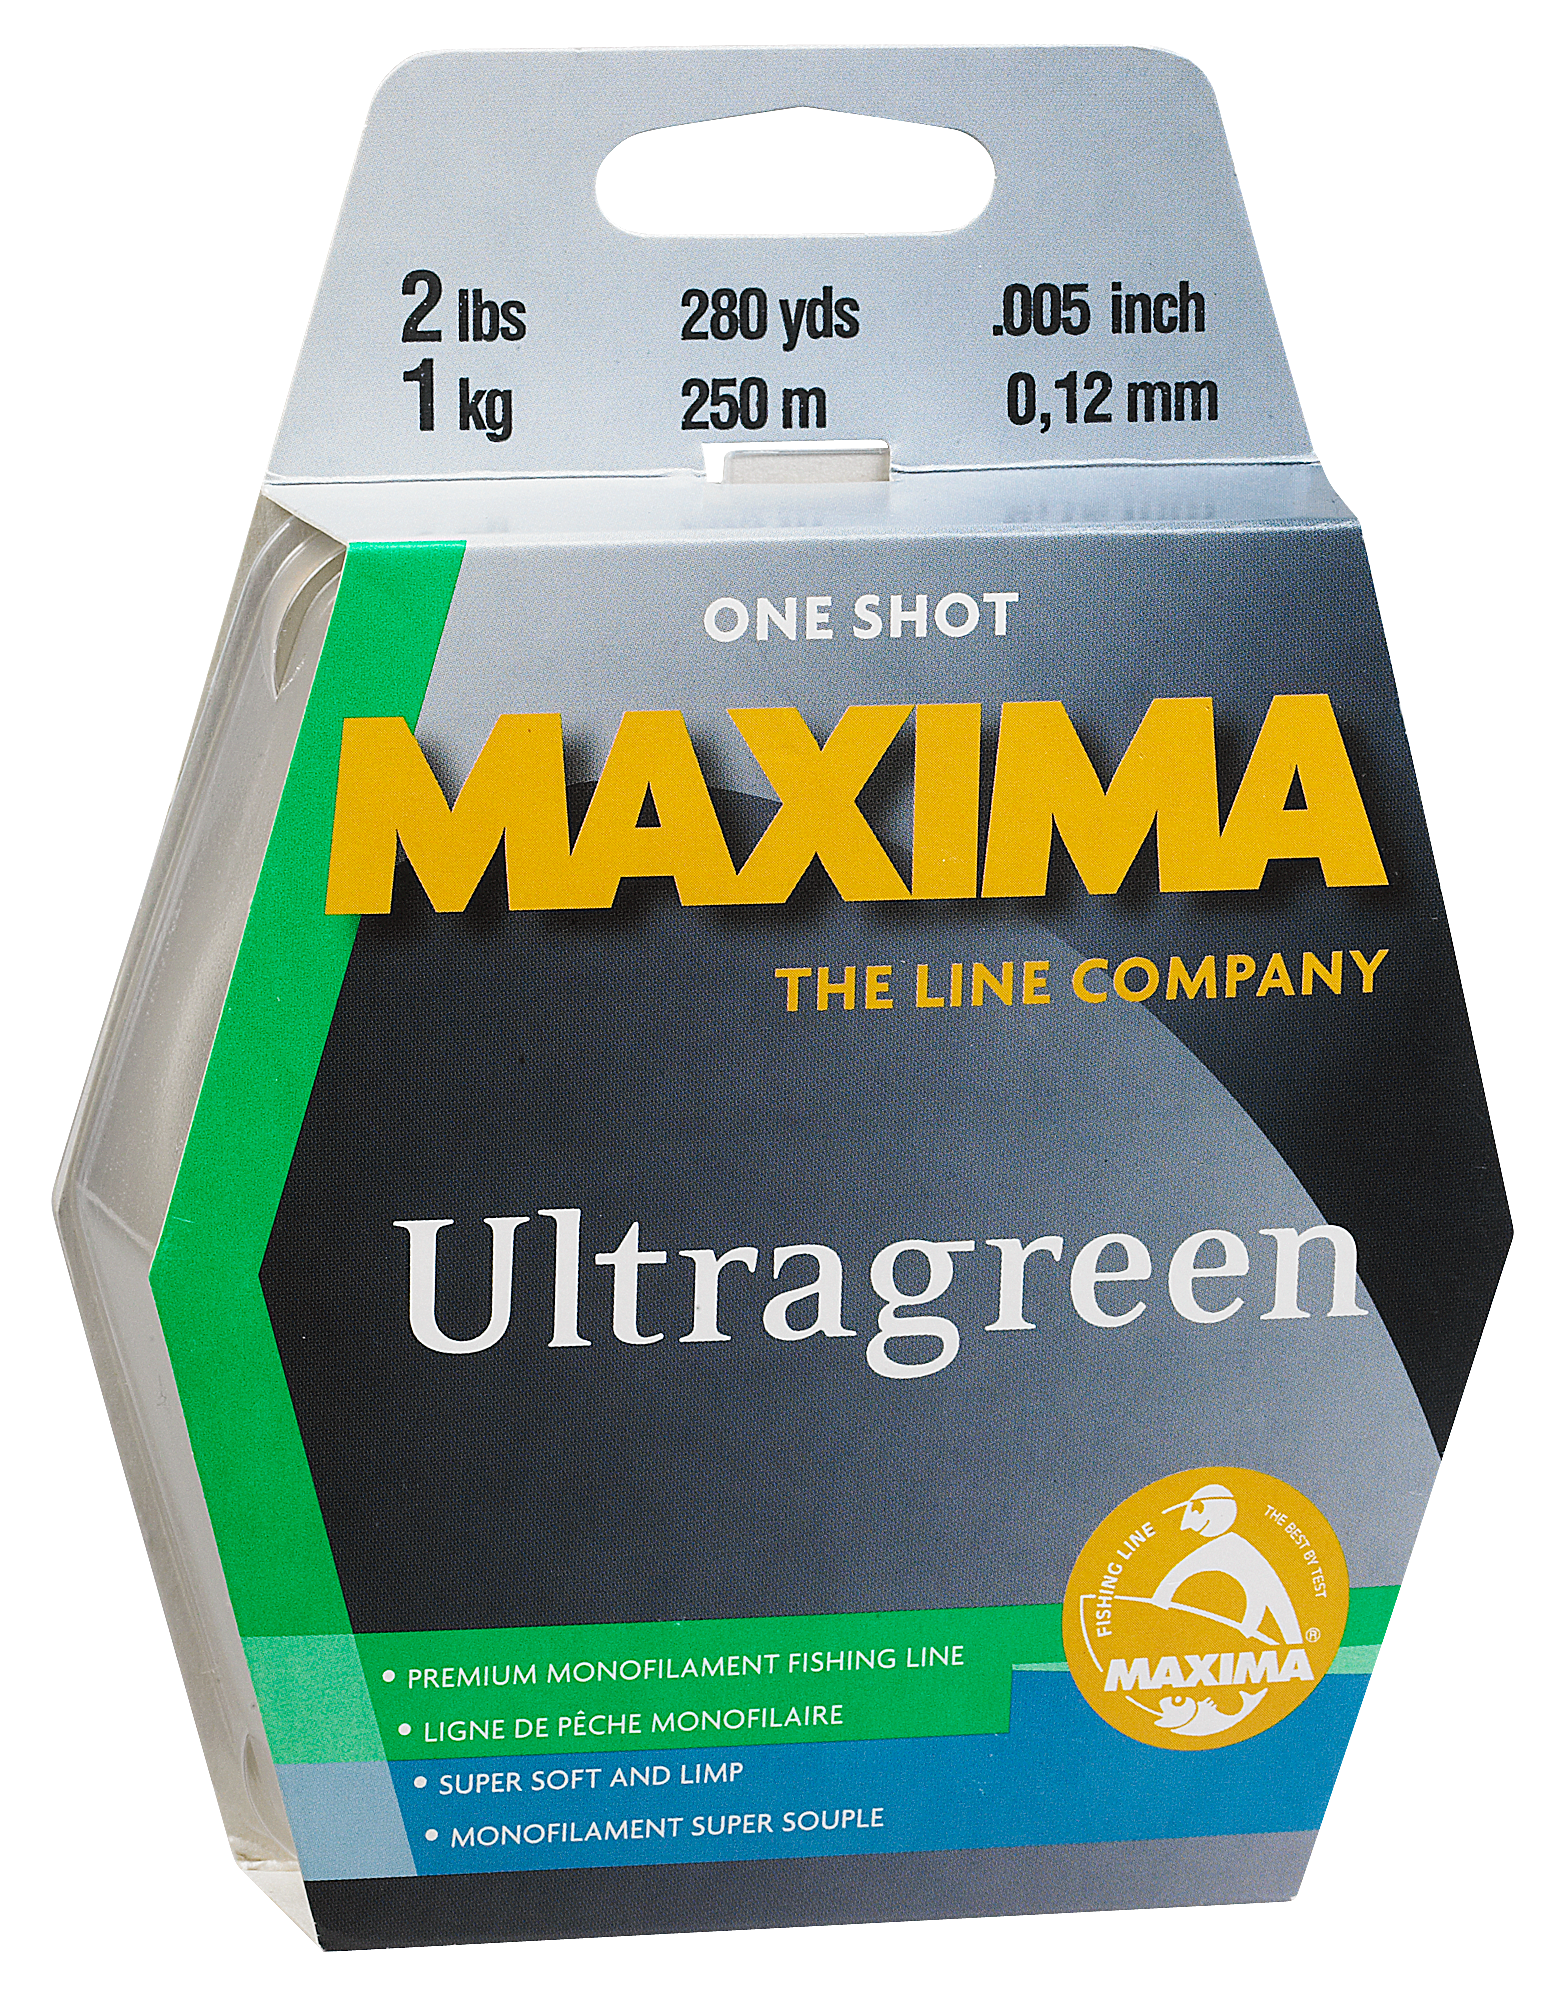 Maxima Ultragreen One Shot Spool - 220yds 15lb